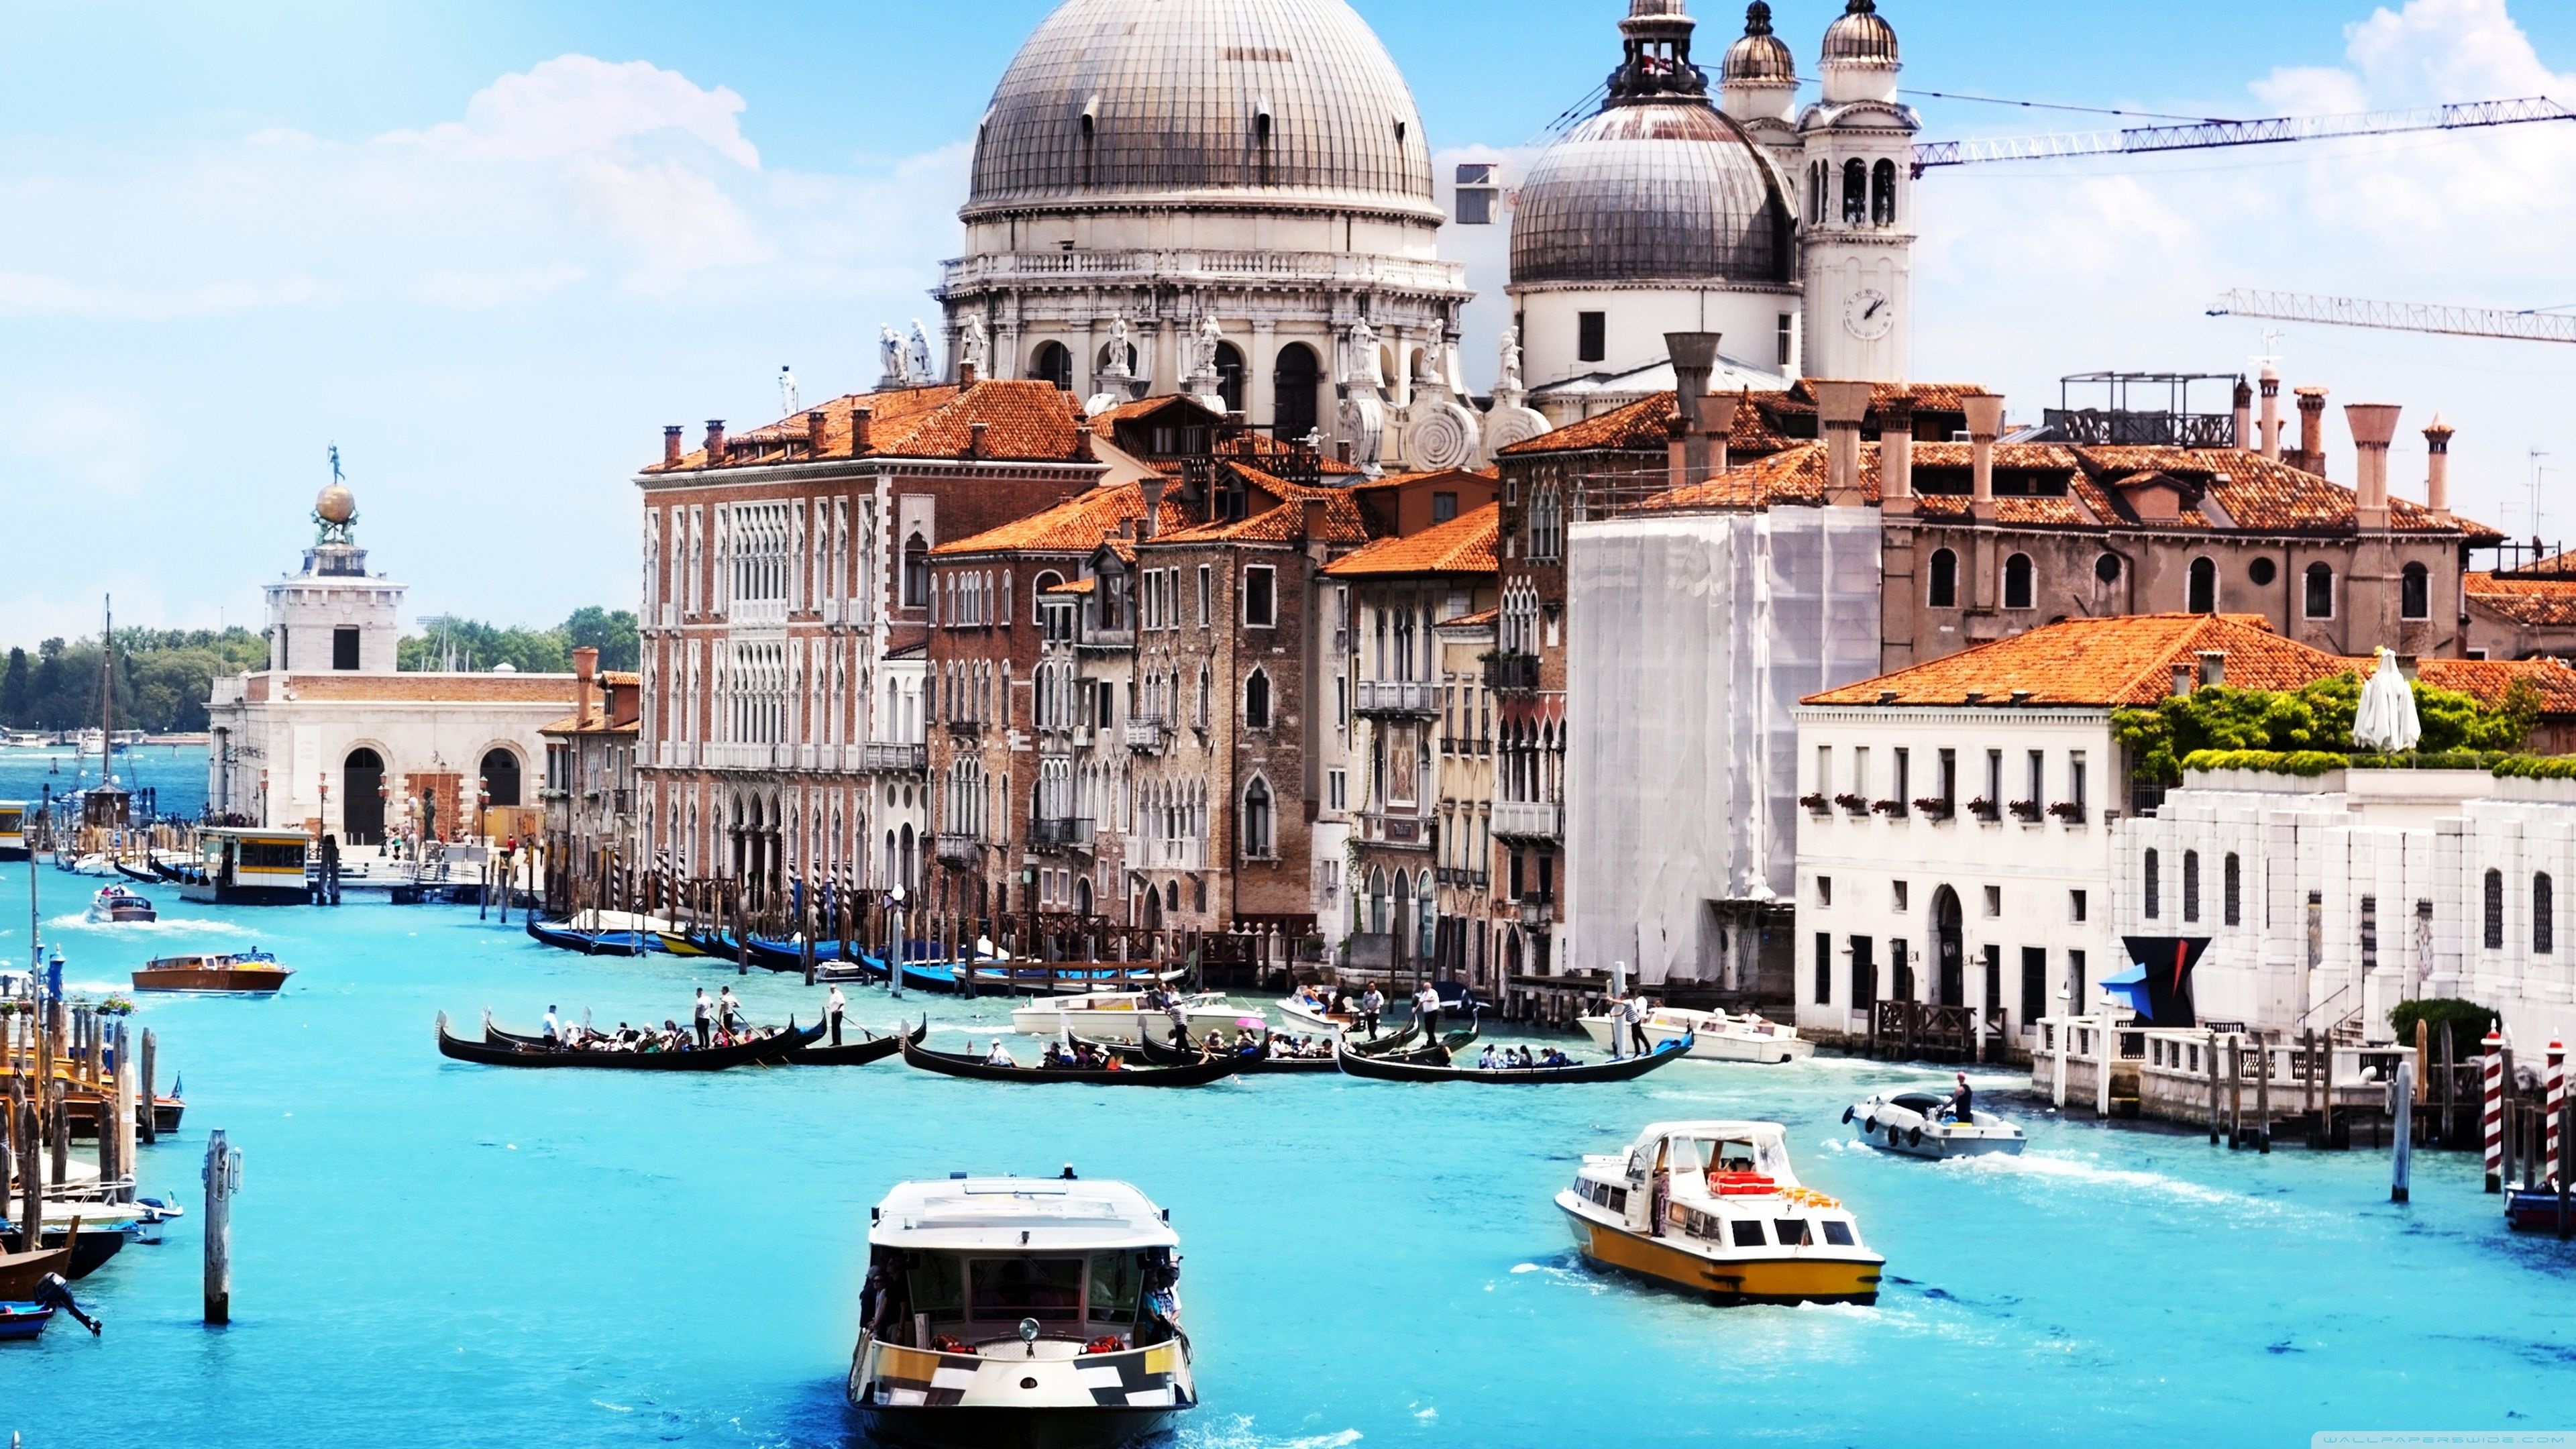 Travel Europe, Desktop wallpapers, Europe travel, Top free backgrounds, 3840x2160 4K Desktop